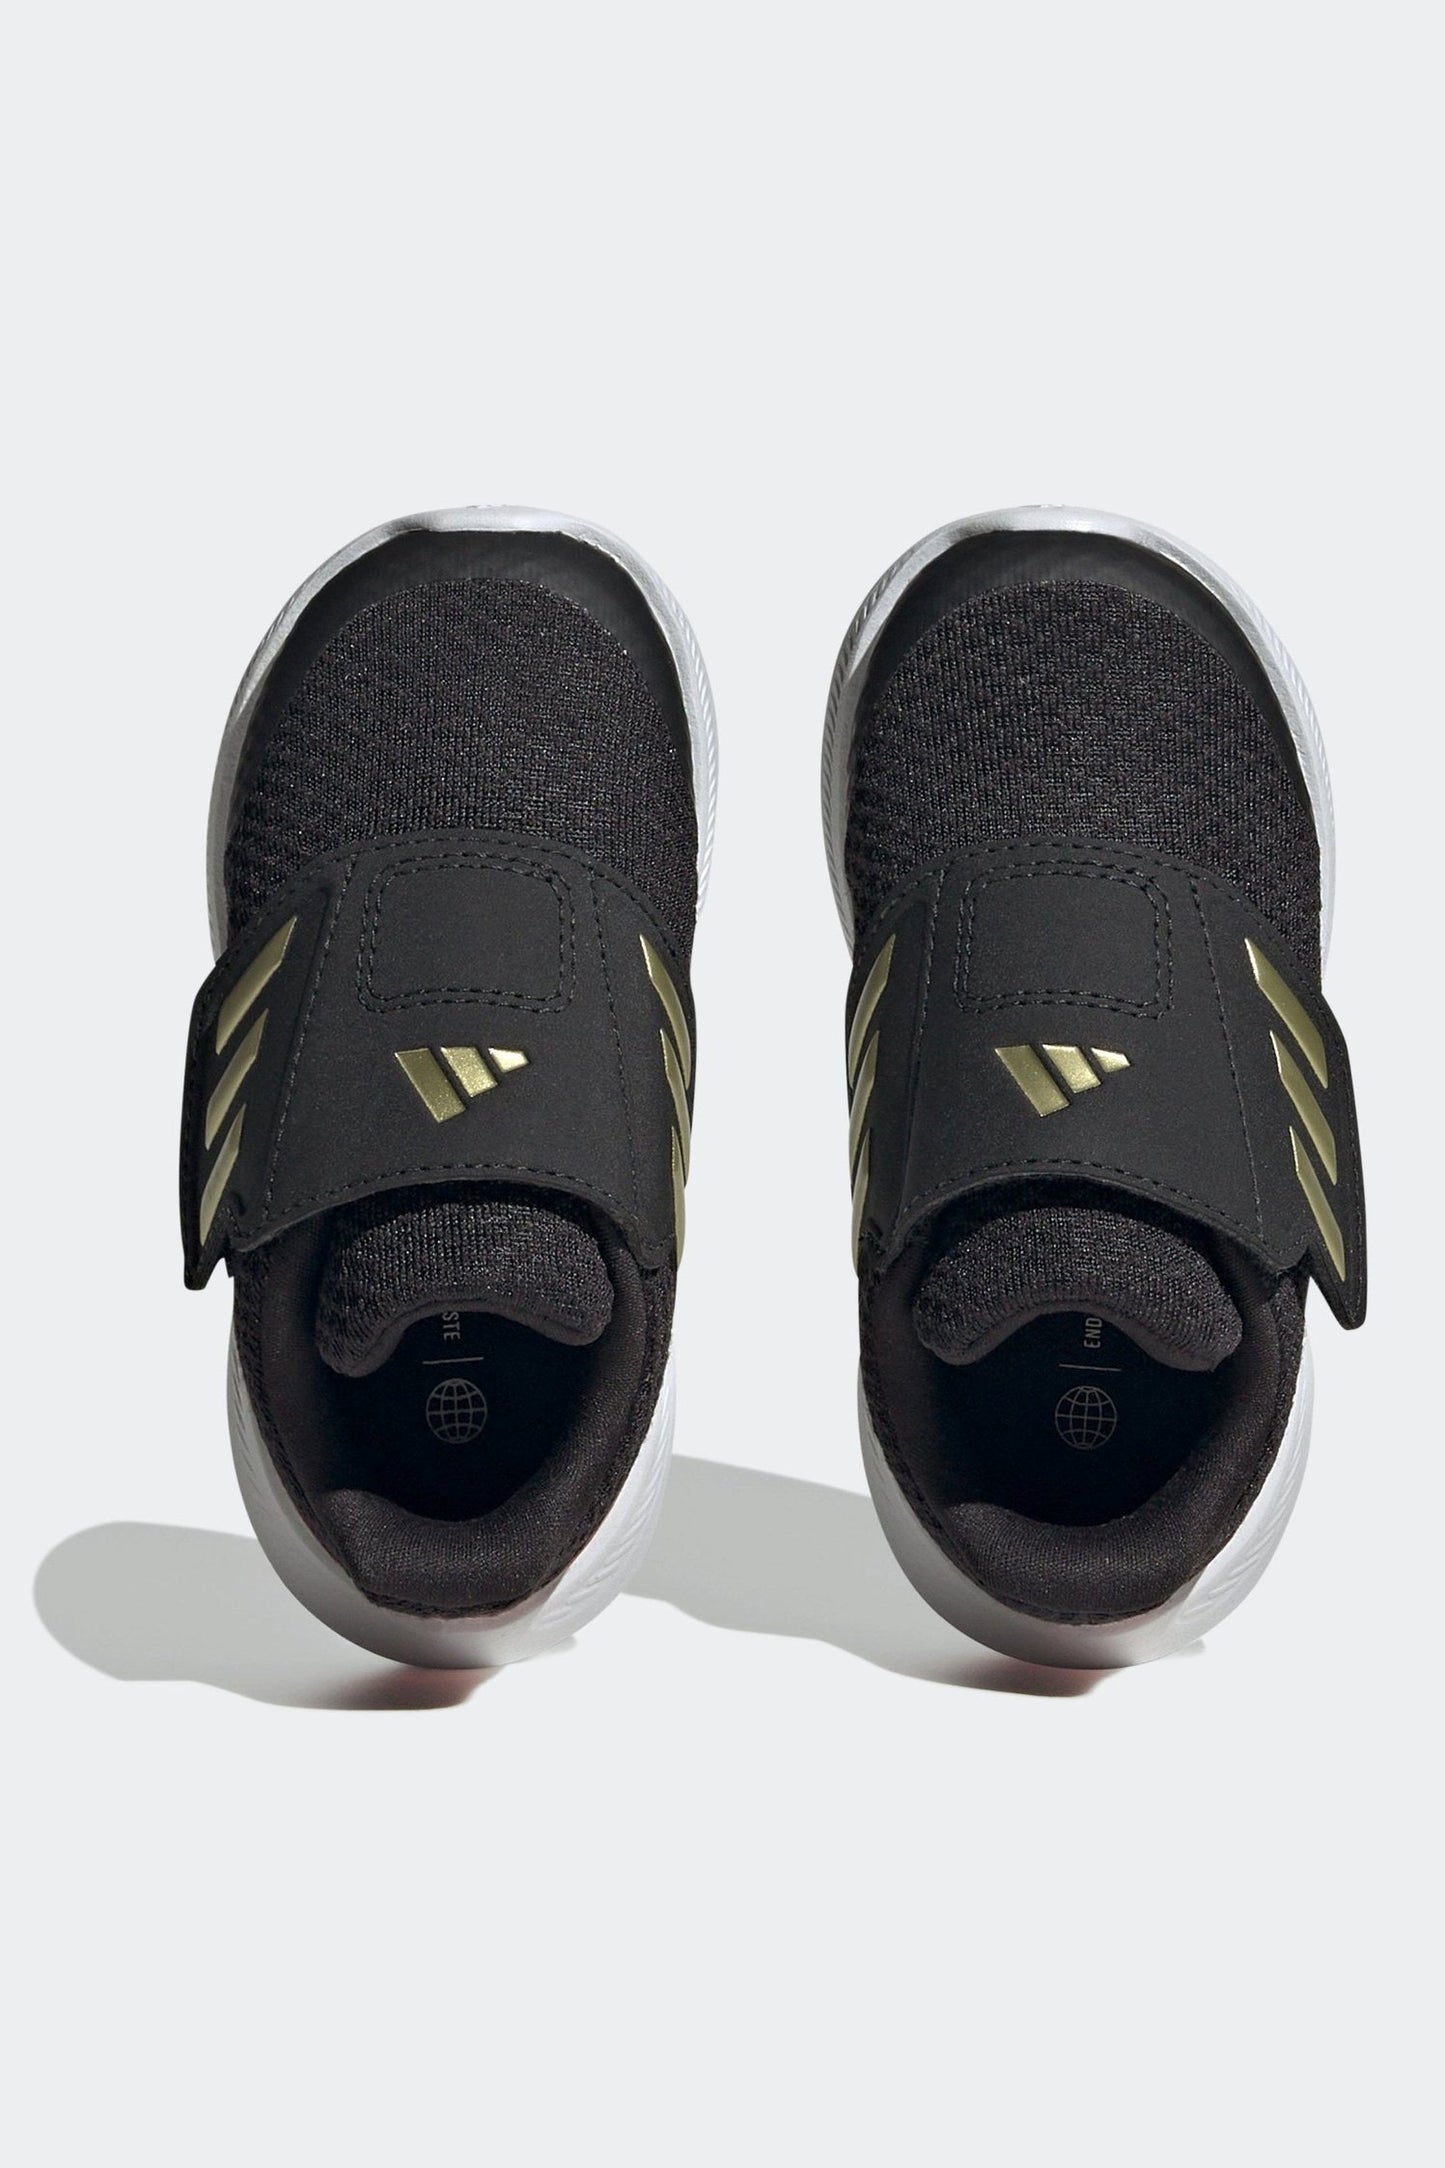 ADIDAS - נעליי ספורט לילדים RUNFALCON 3.0 בצבע שחור וזהב - MASHBIR//365